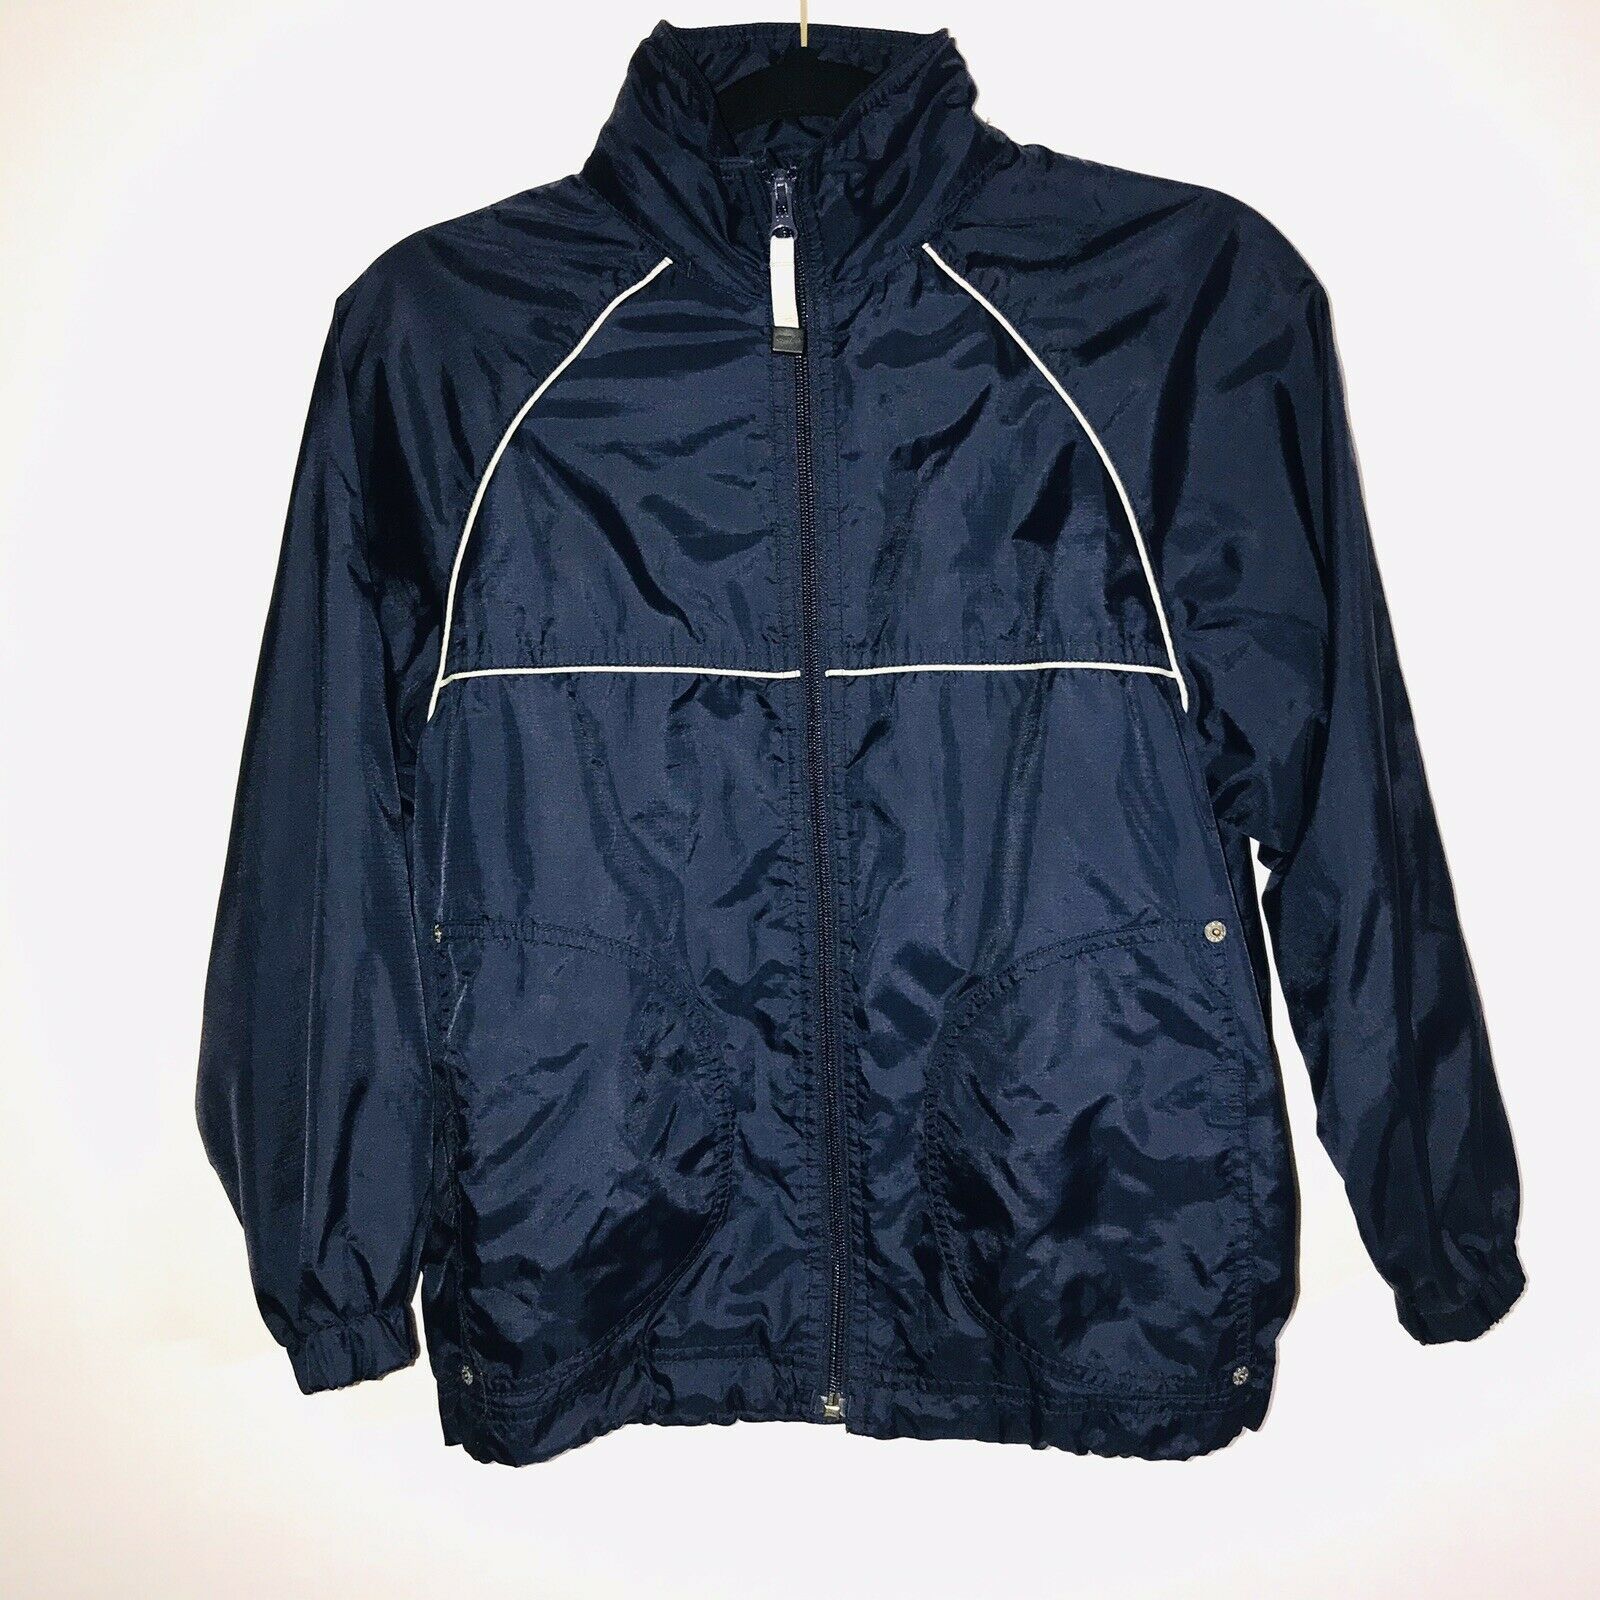 Kids GAP Light Weight Nylon Jacket Navy Blue With Hidden Hood Size S/M (7-8)